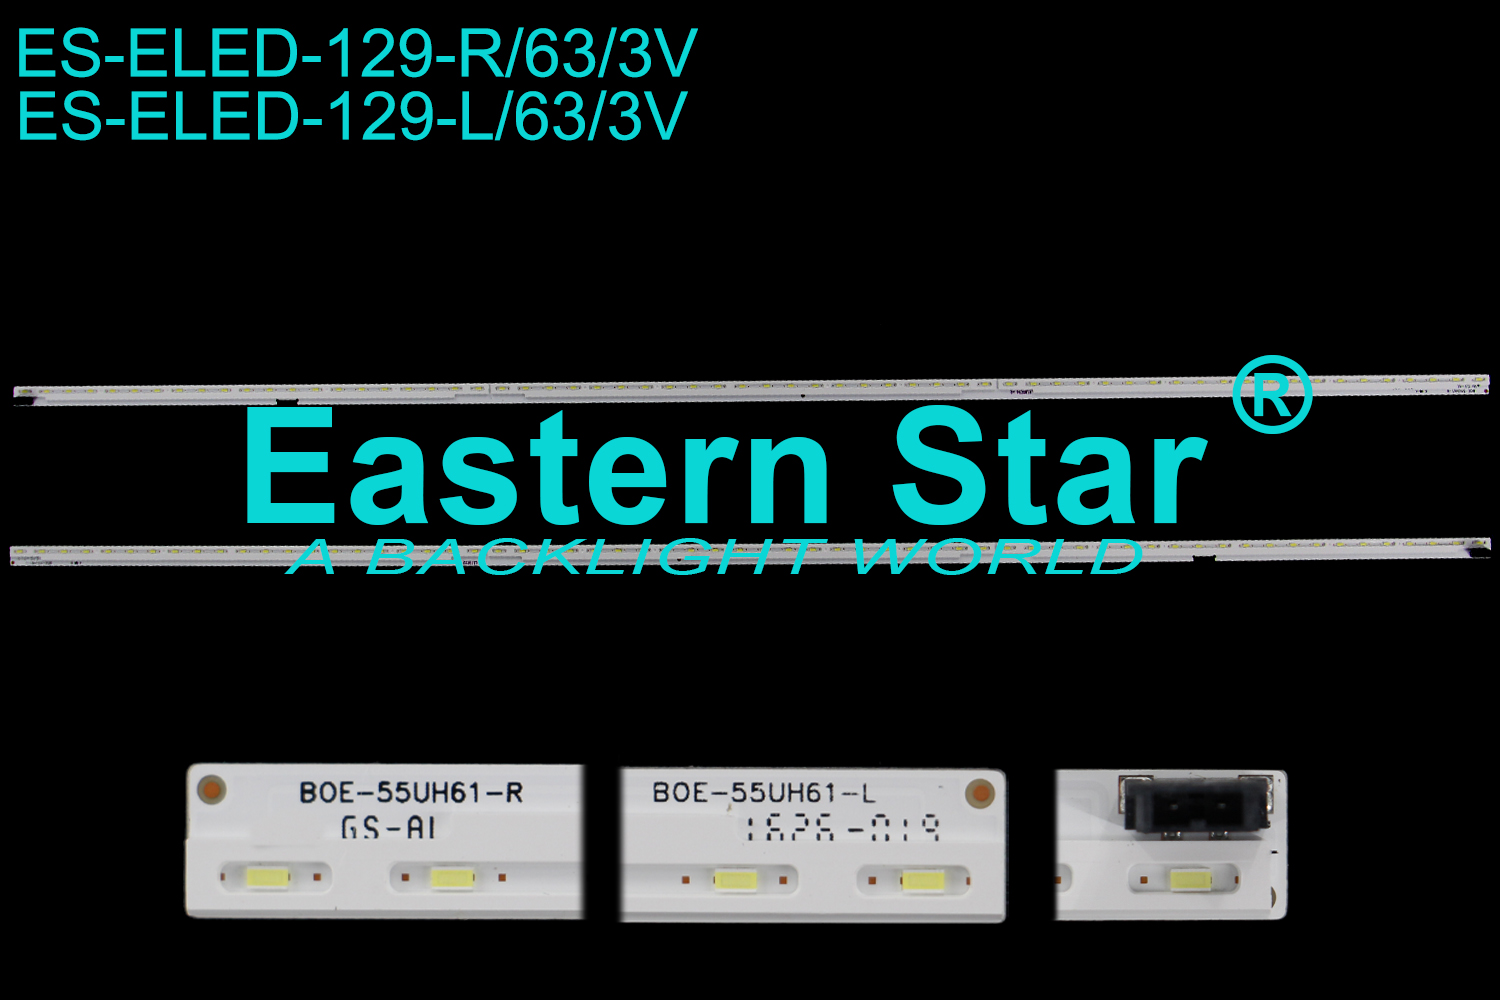 ES-ELED-129 ELED/EDGE TV backlight use for Lg 55" 55UH61-R  G1R2C92  c2  55UH61-L   G113C92  d2 led strips(2) ORIGINAL STOCK